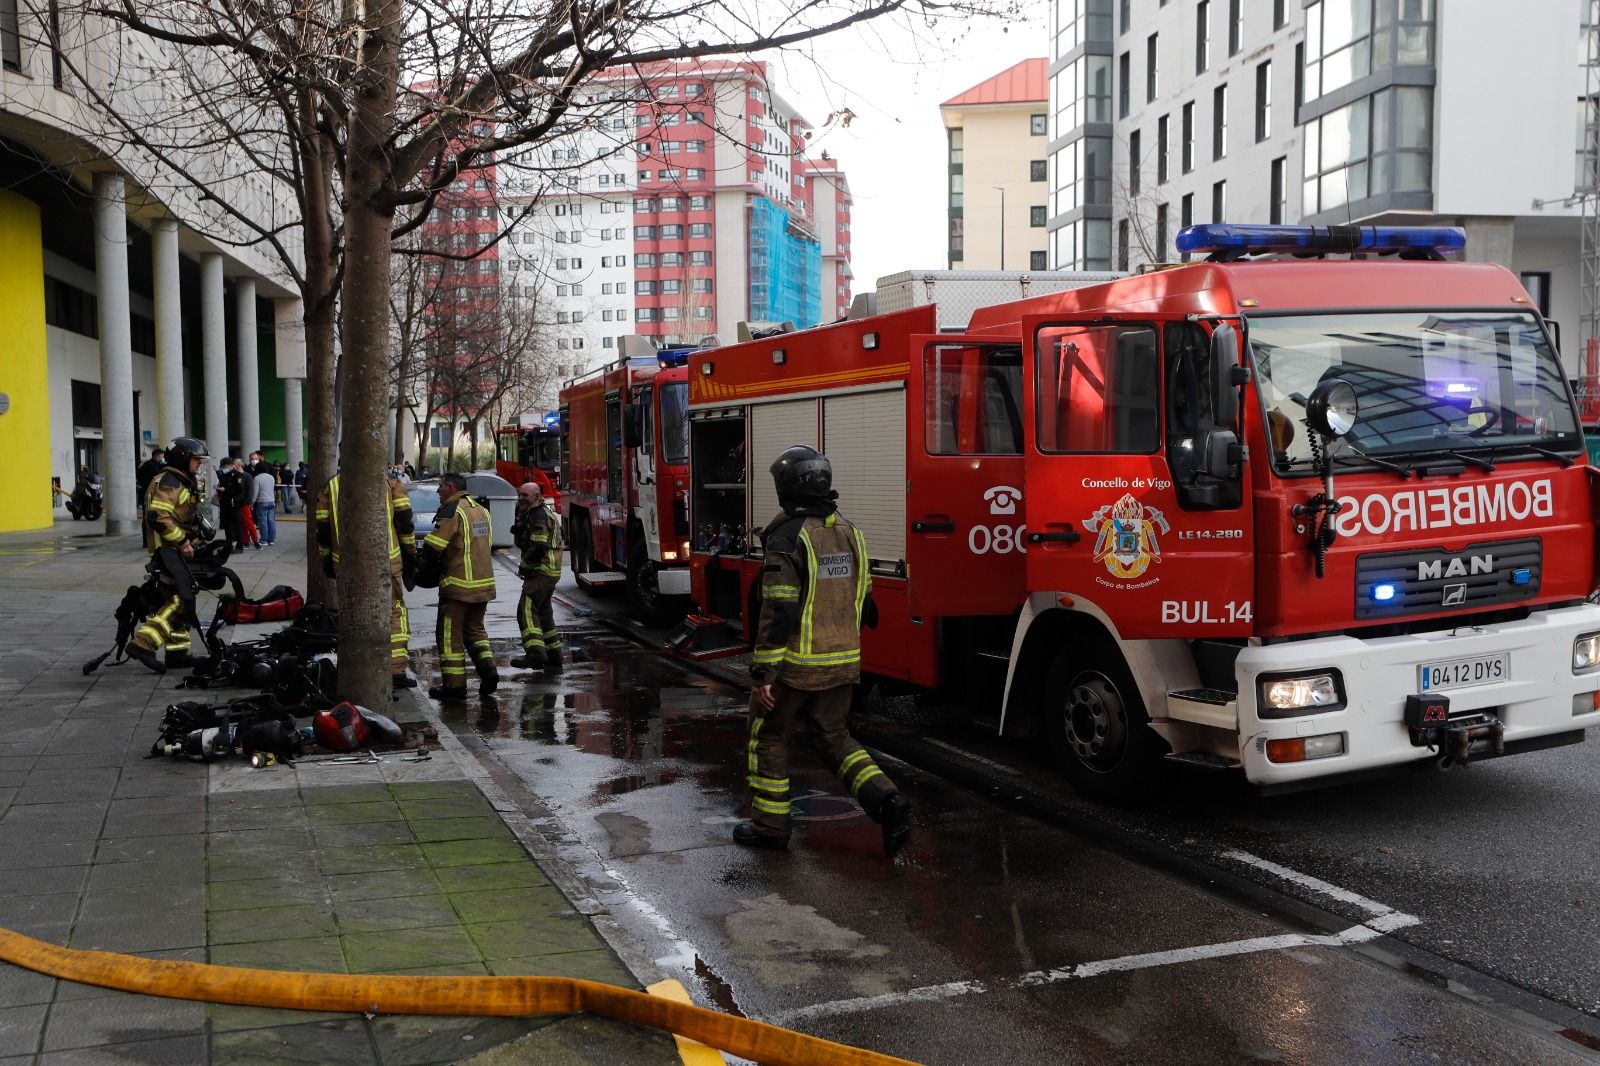 Tres bomberos hospitalizados y casi 30 coches quemados en un virulento incendio en Navia